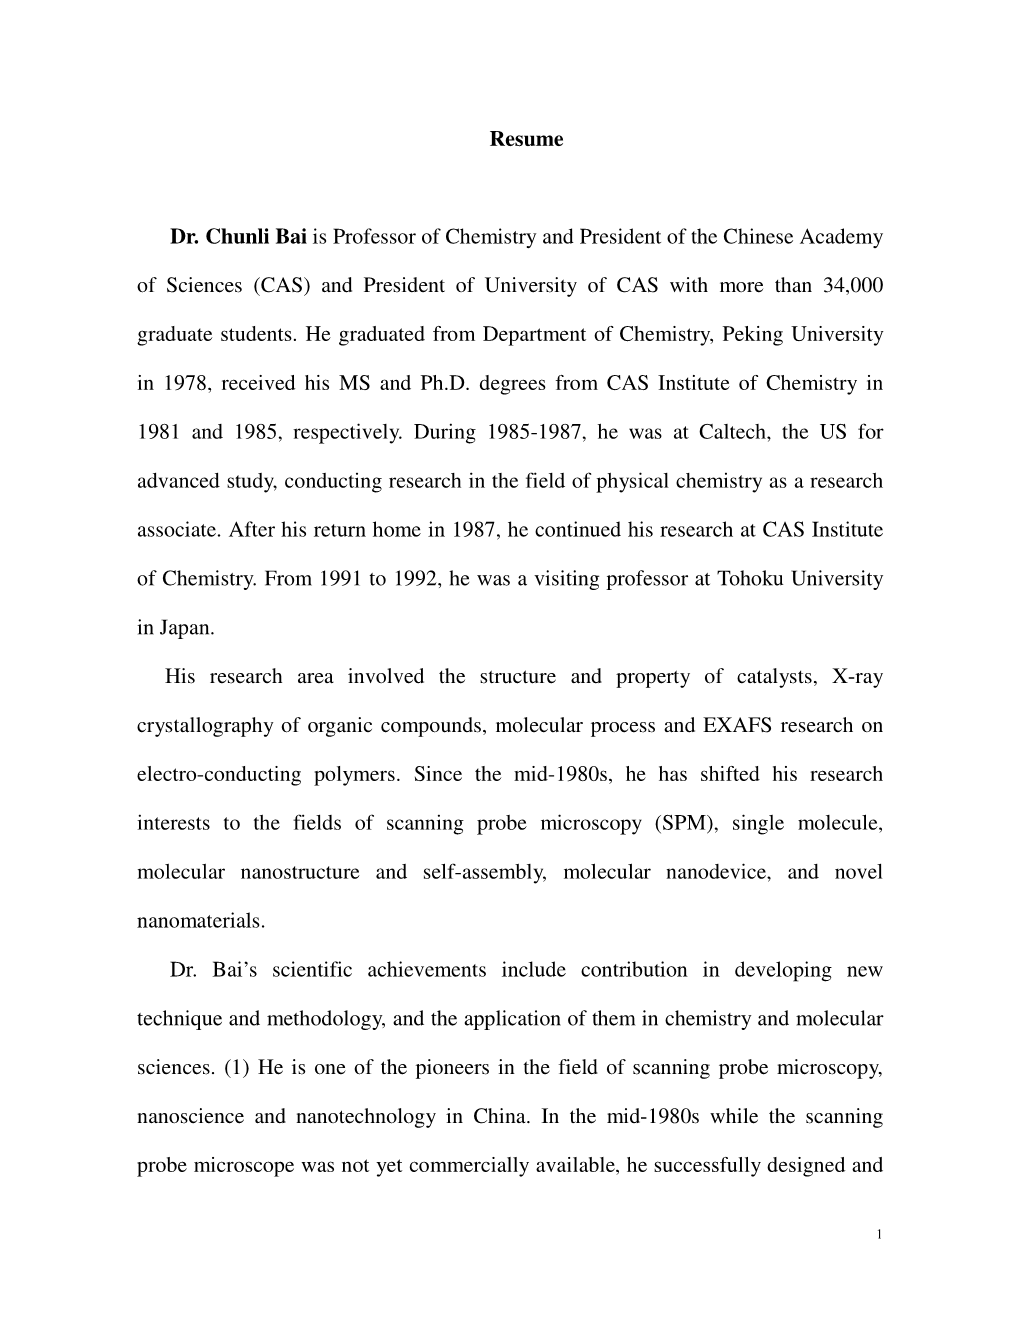 Resume Dr. Chunli Bai Is Professor of Chemistry